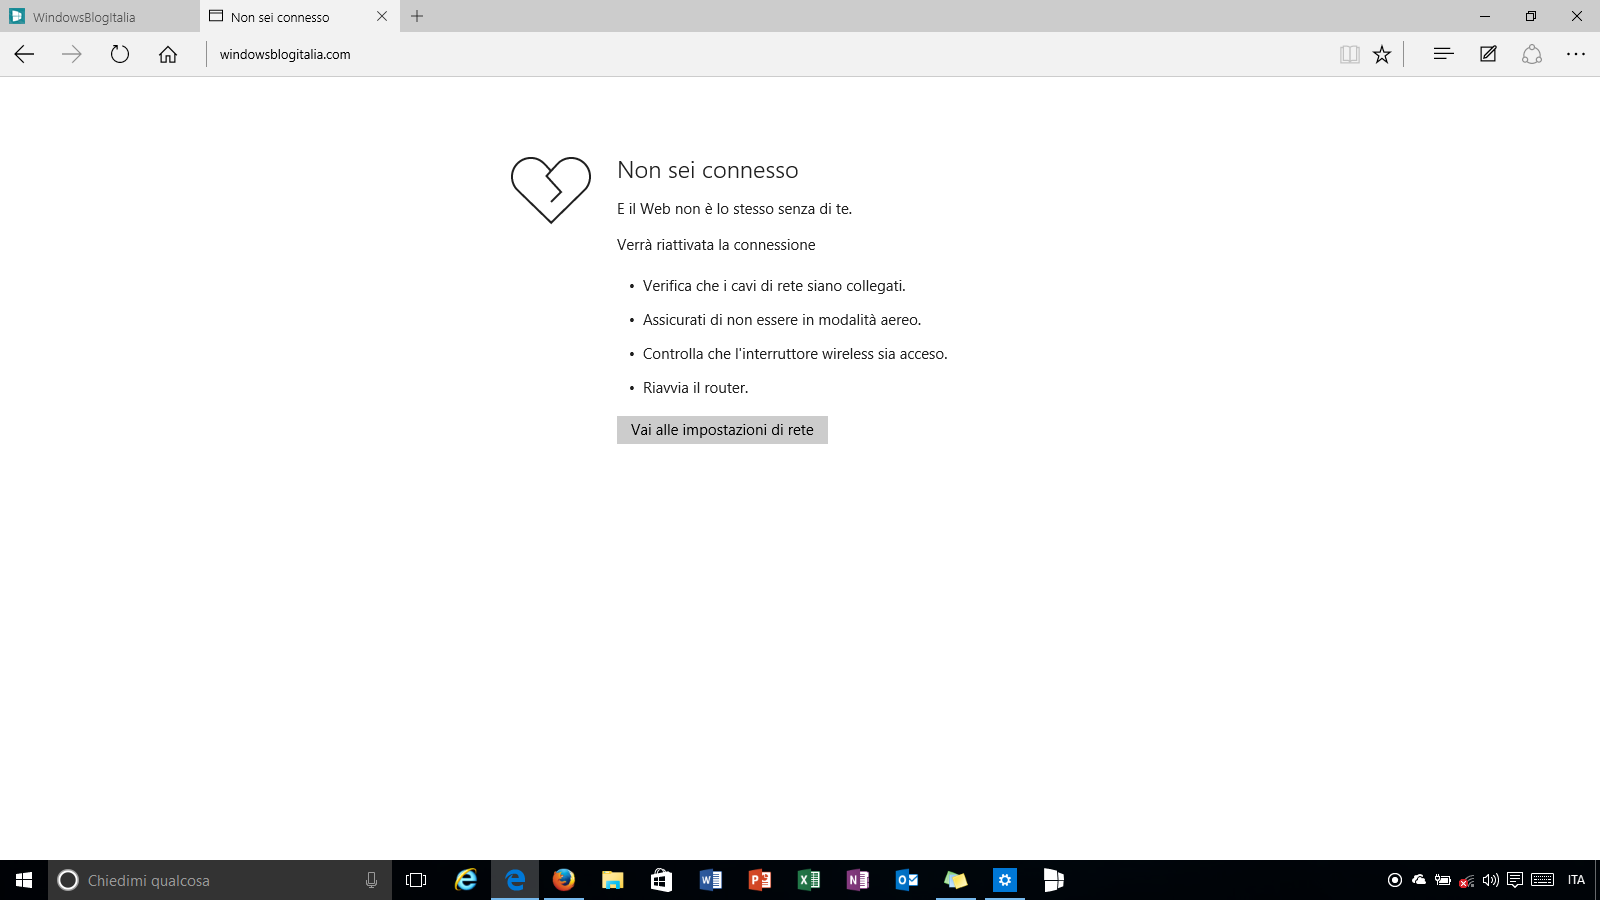 Microsoft Edge - Windows 10